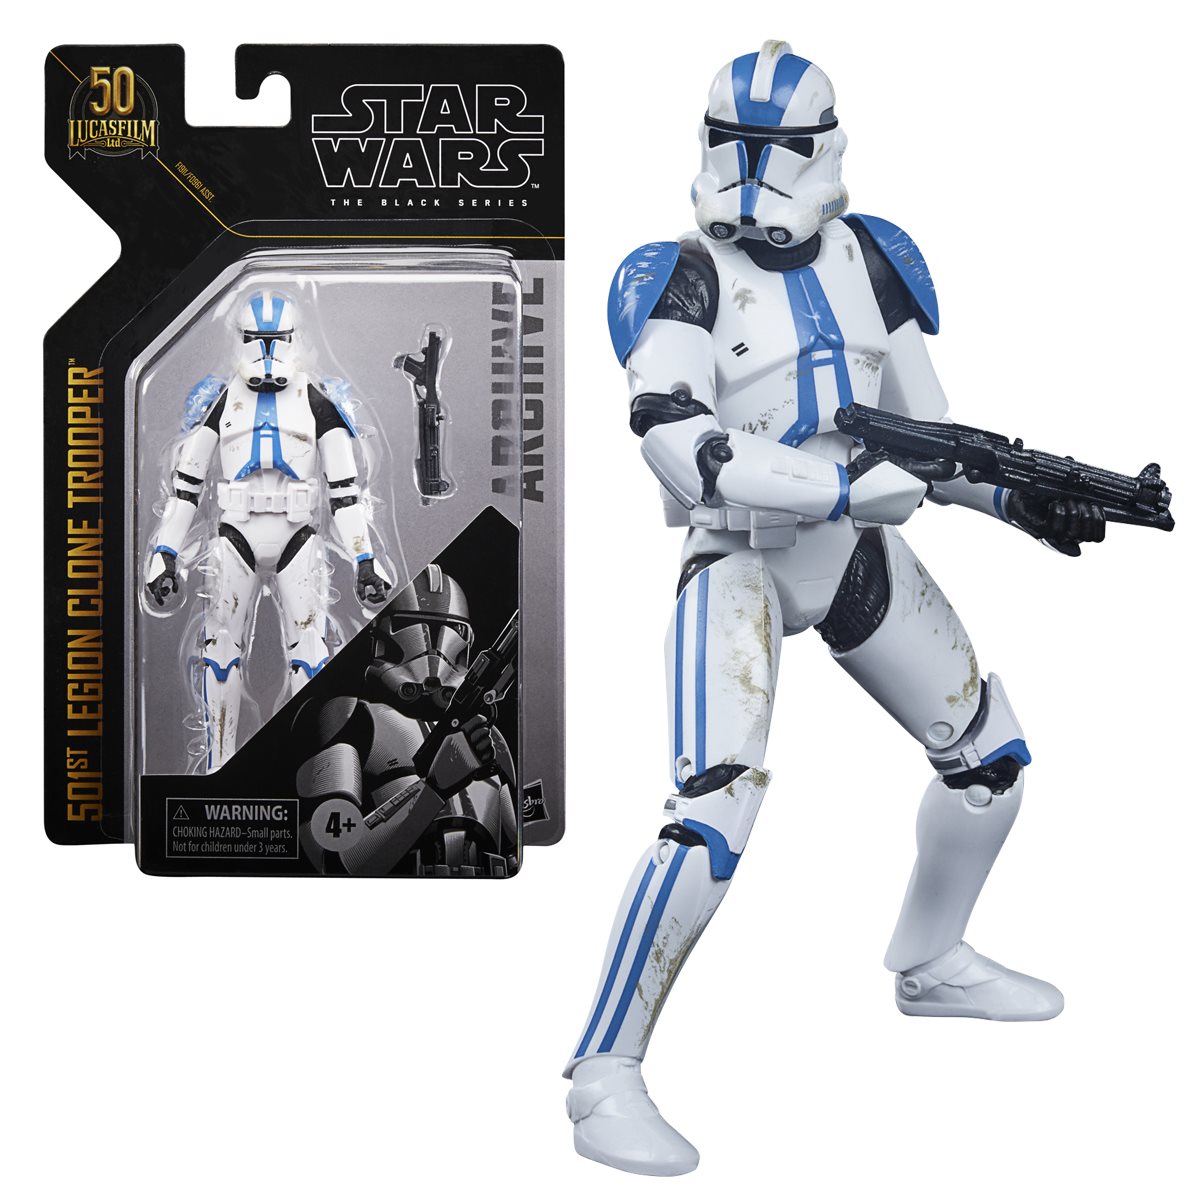 Star Wars 501st Légion Spécial Orage Clone Troopers Mini Figurines Soldats Toys 